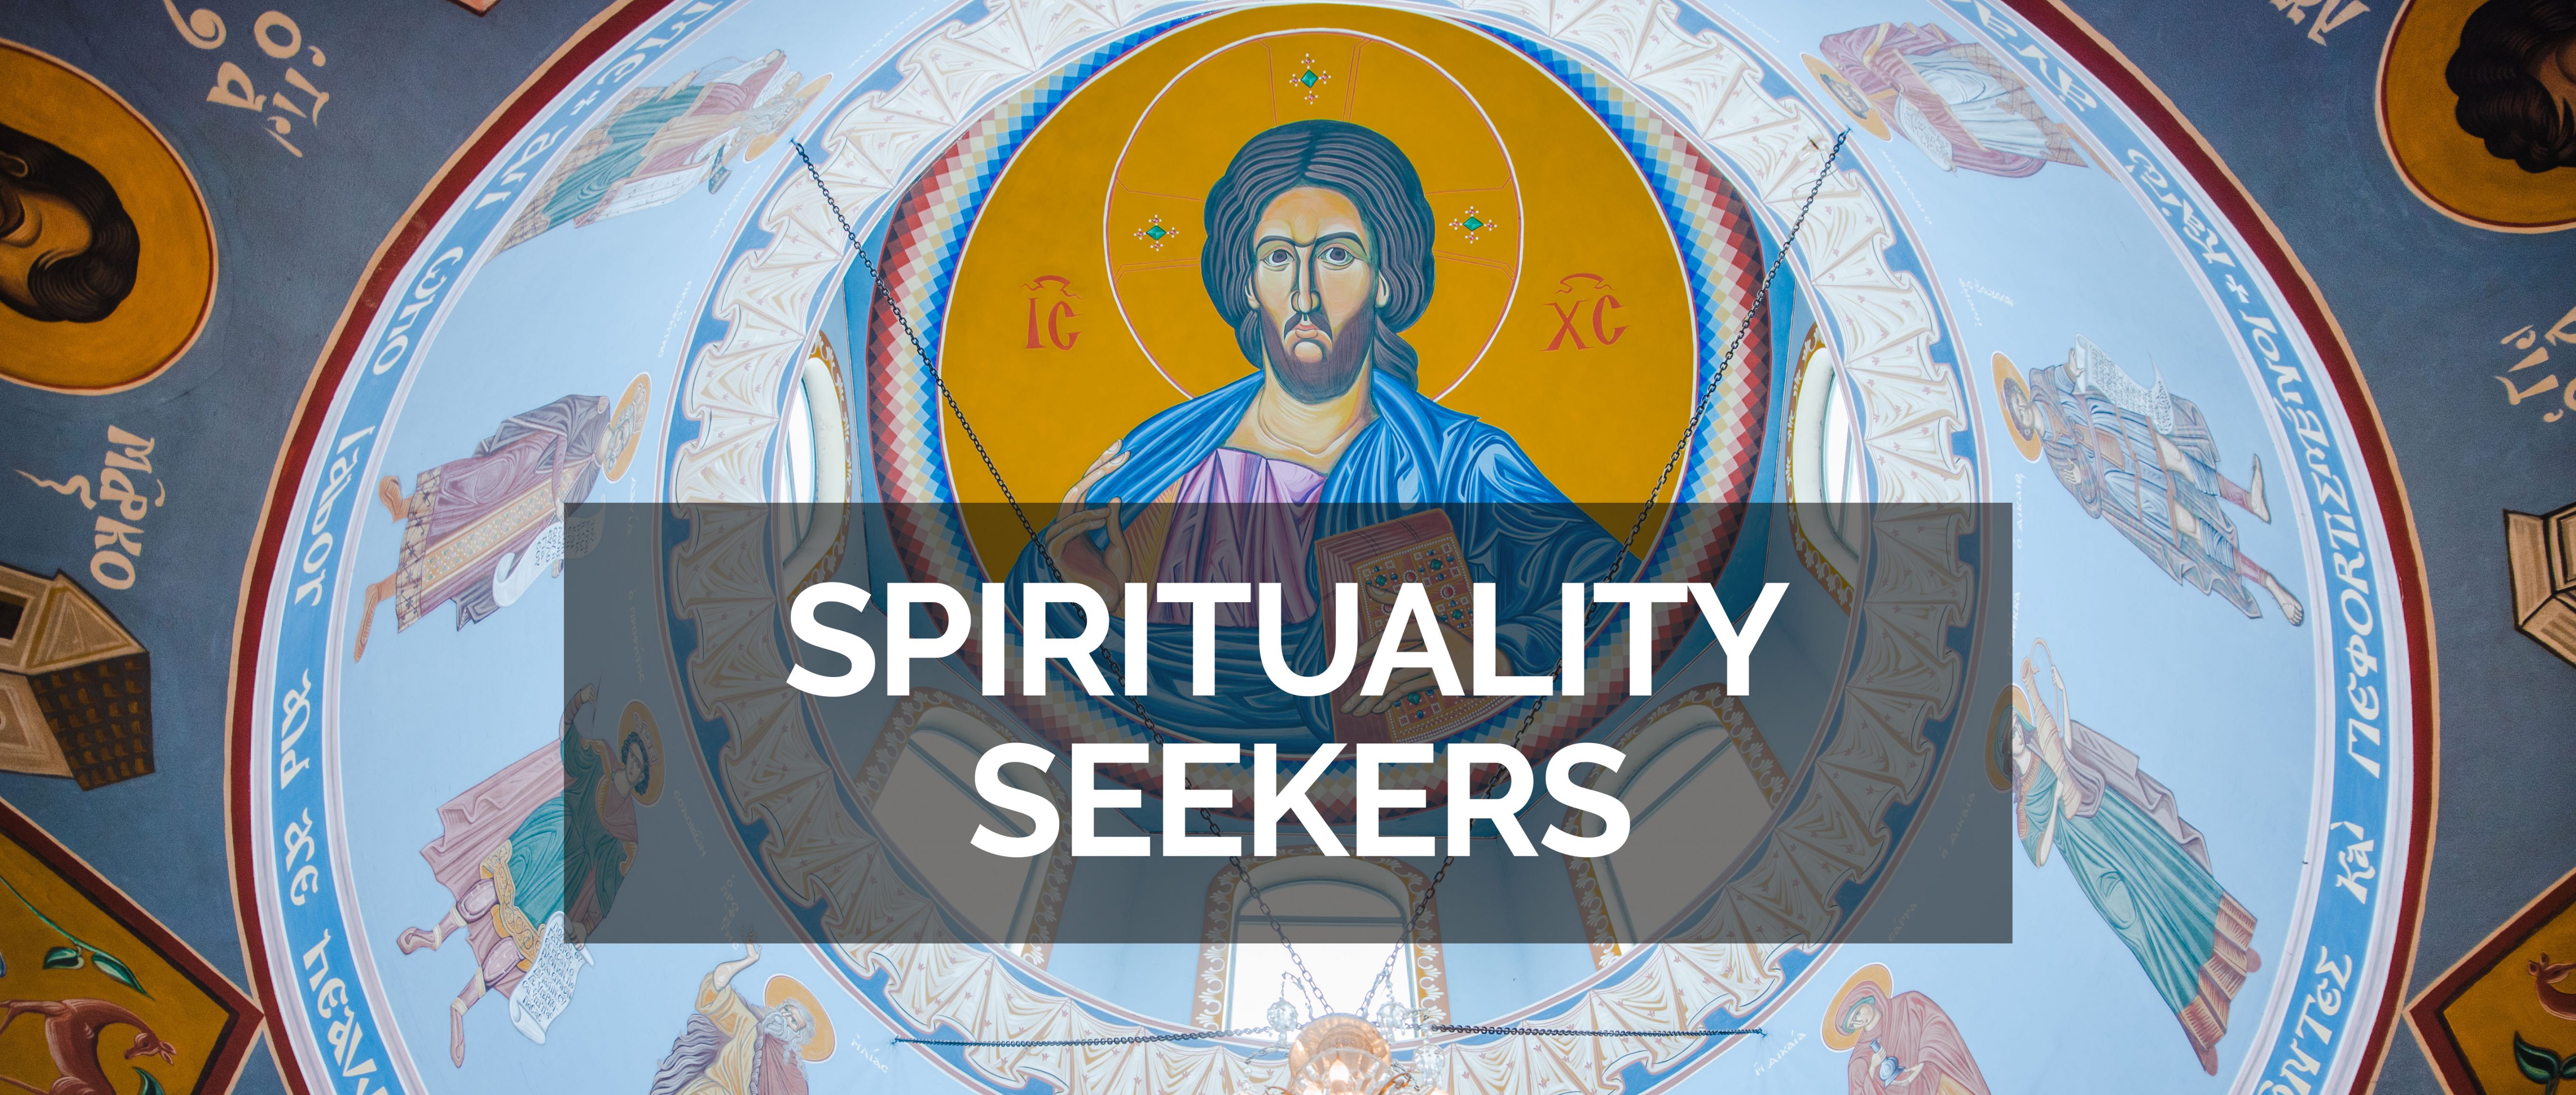 Spirituality Seekers